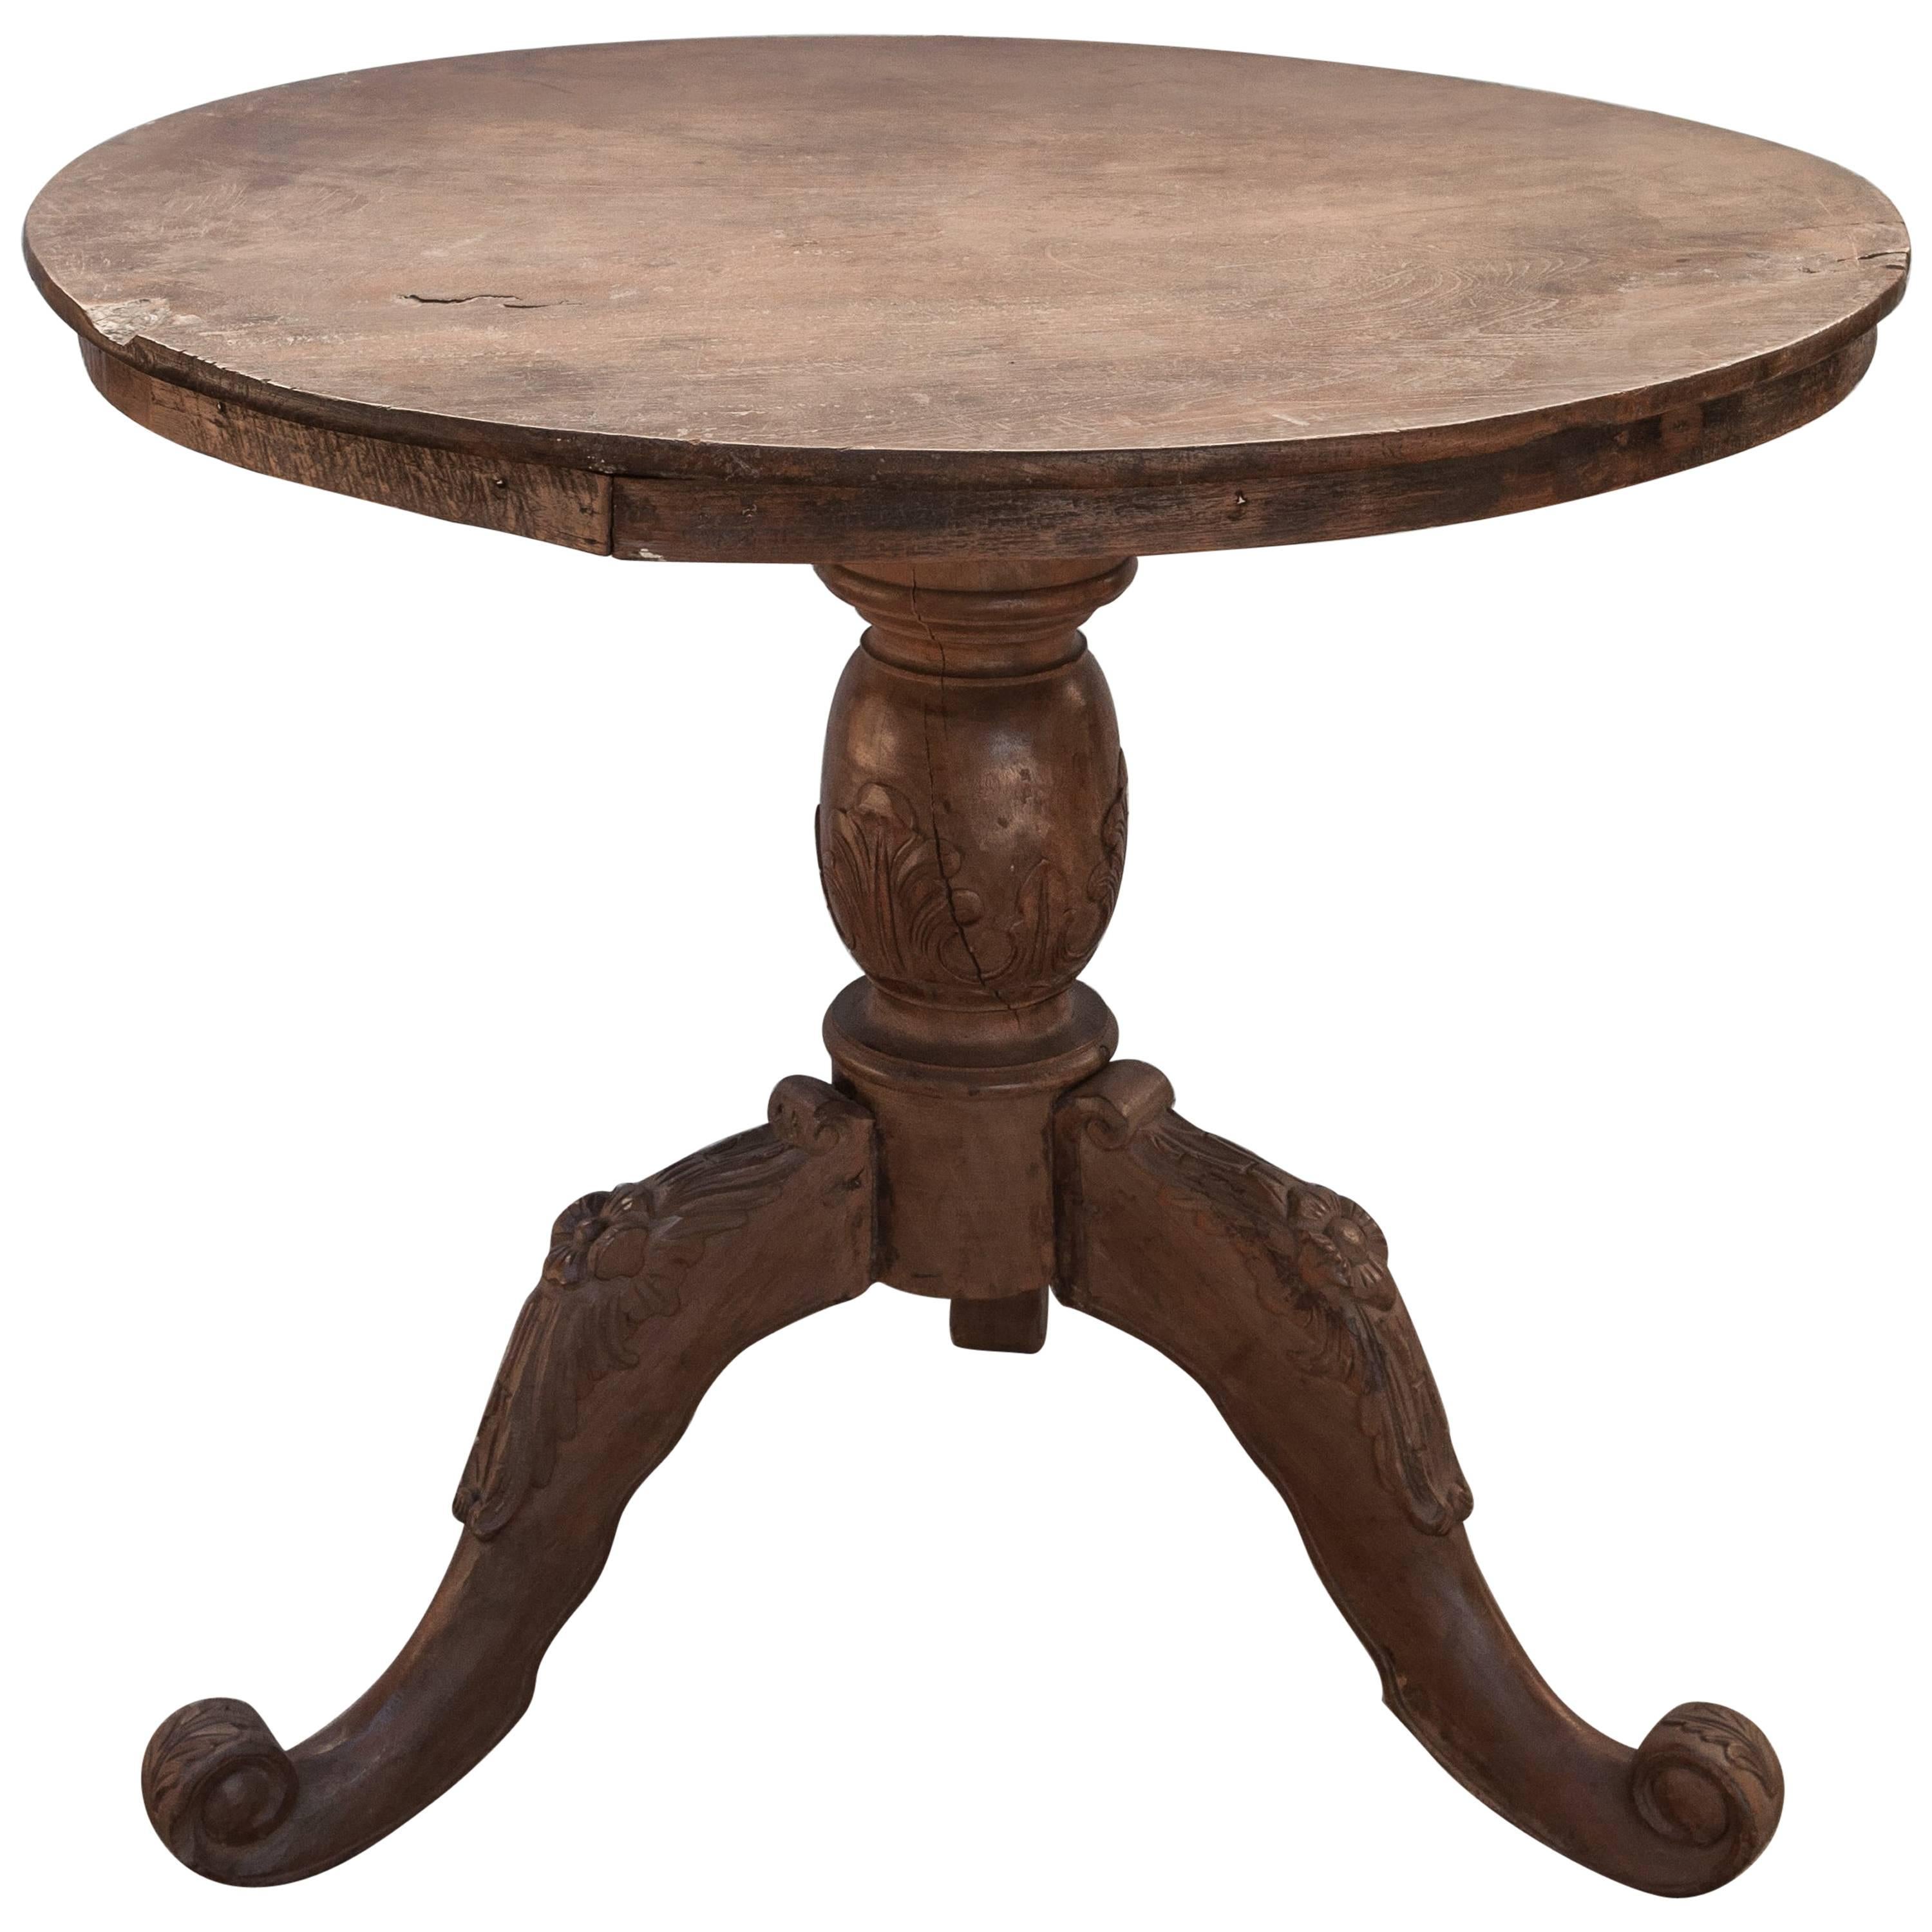 Round Teak Pedestal Table 33" One Plank Top, Carved Legs. Mid-20th Century, Java